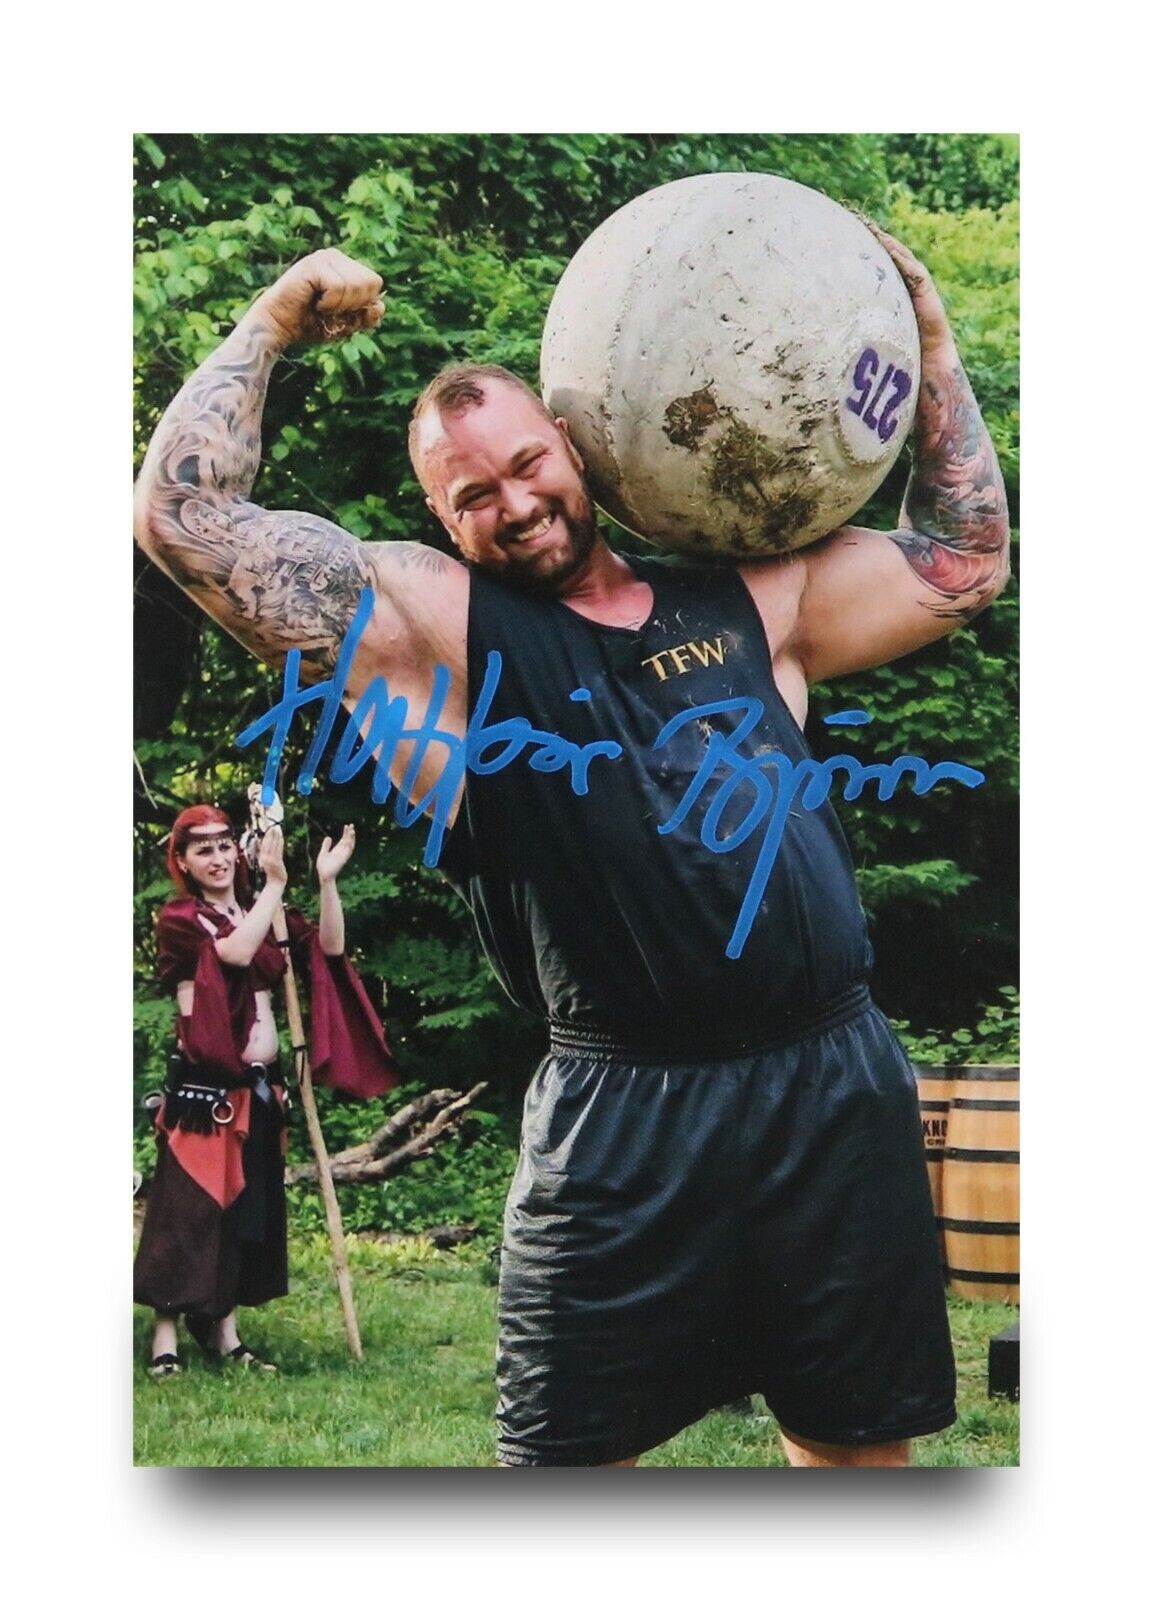 Hafthor 'Thor' Bjornsson Signed 6x4 Photo Poster painting World's Strongest Man Autograph + COA